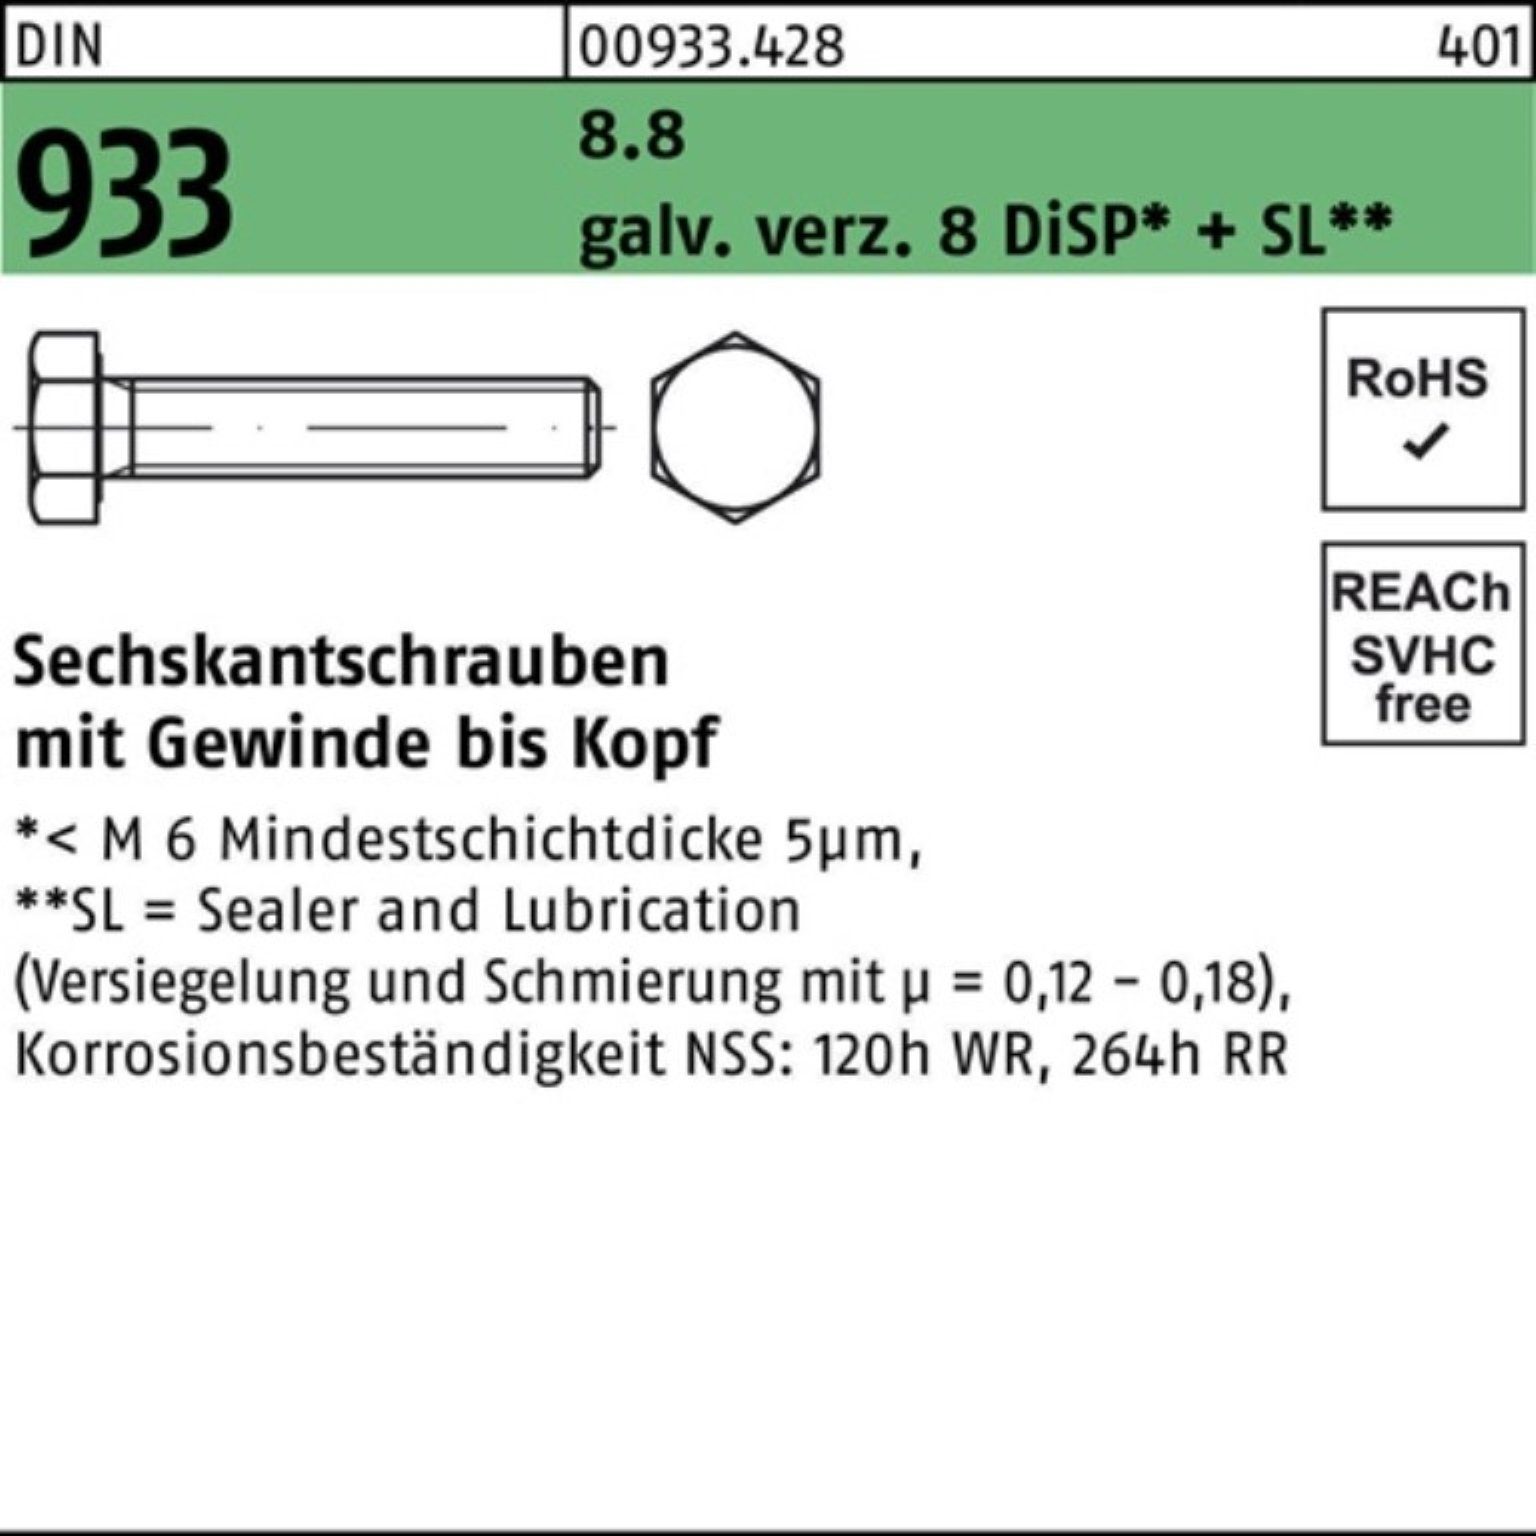 Reyher Sechskantschraube 100er Pack 8 DIN Sechskantschraube DiSP S M24x Zn 933 8.8 gal 100 + VG